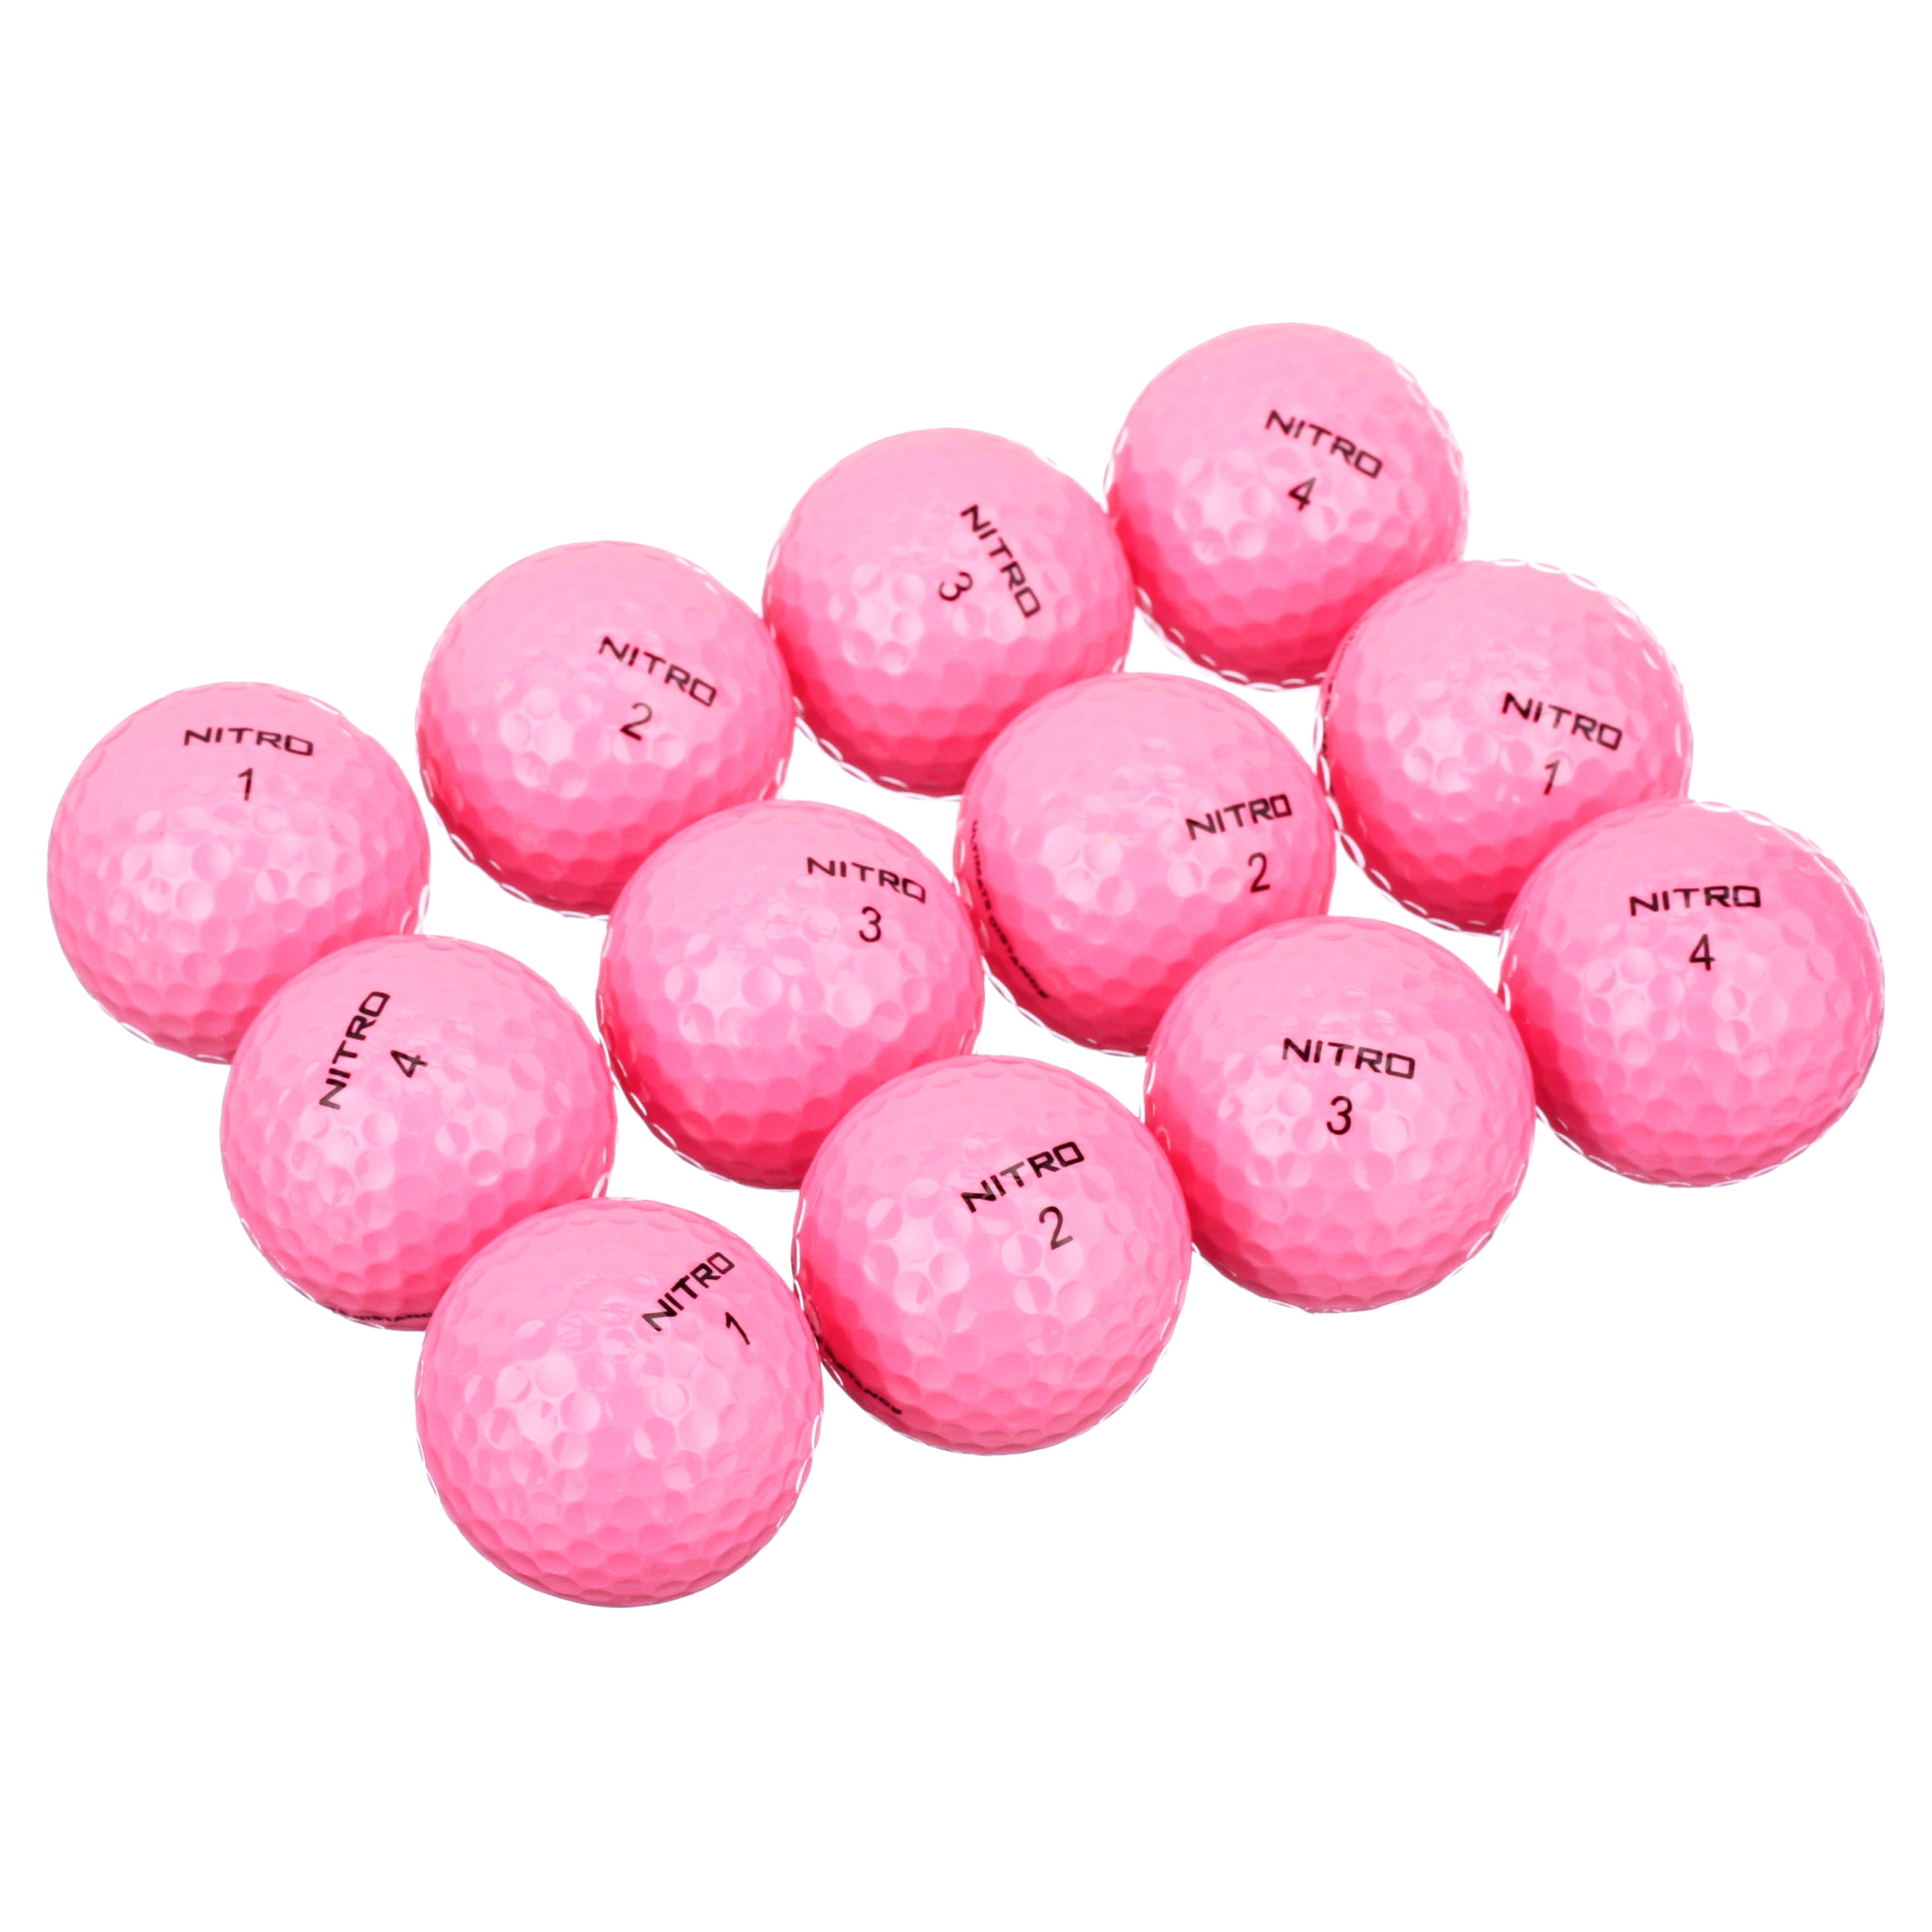 Nitro Golf Ultimate Distance Golf Balls, Pink, 12 Pack